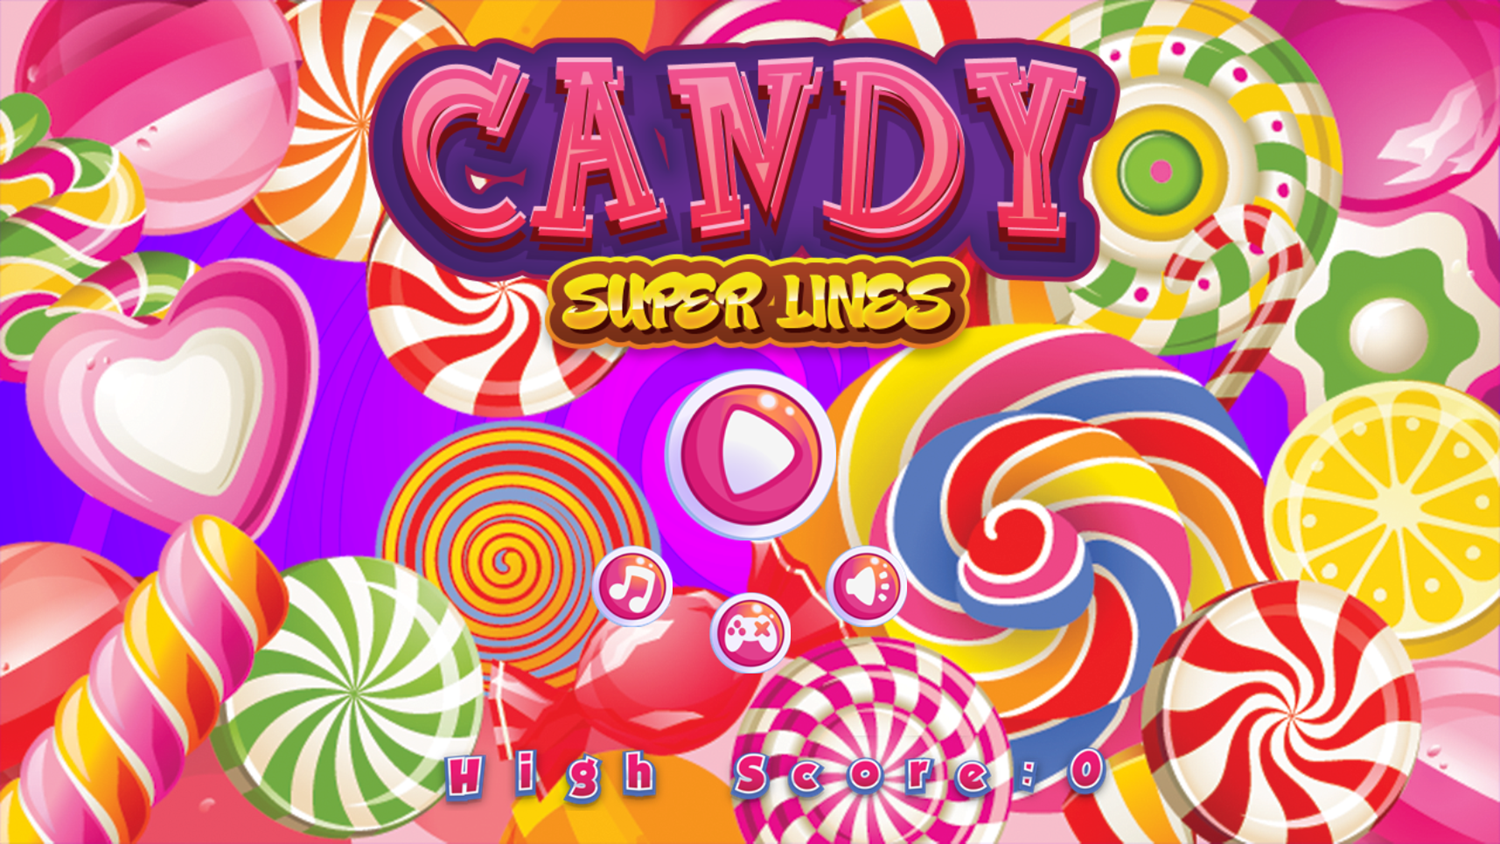 Candy Super Lines Game Welcome Screen Screenshot.